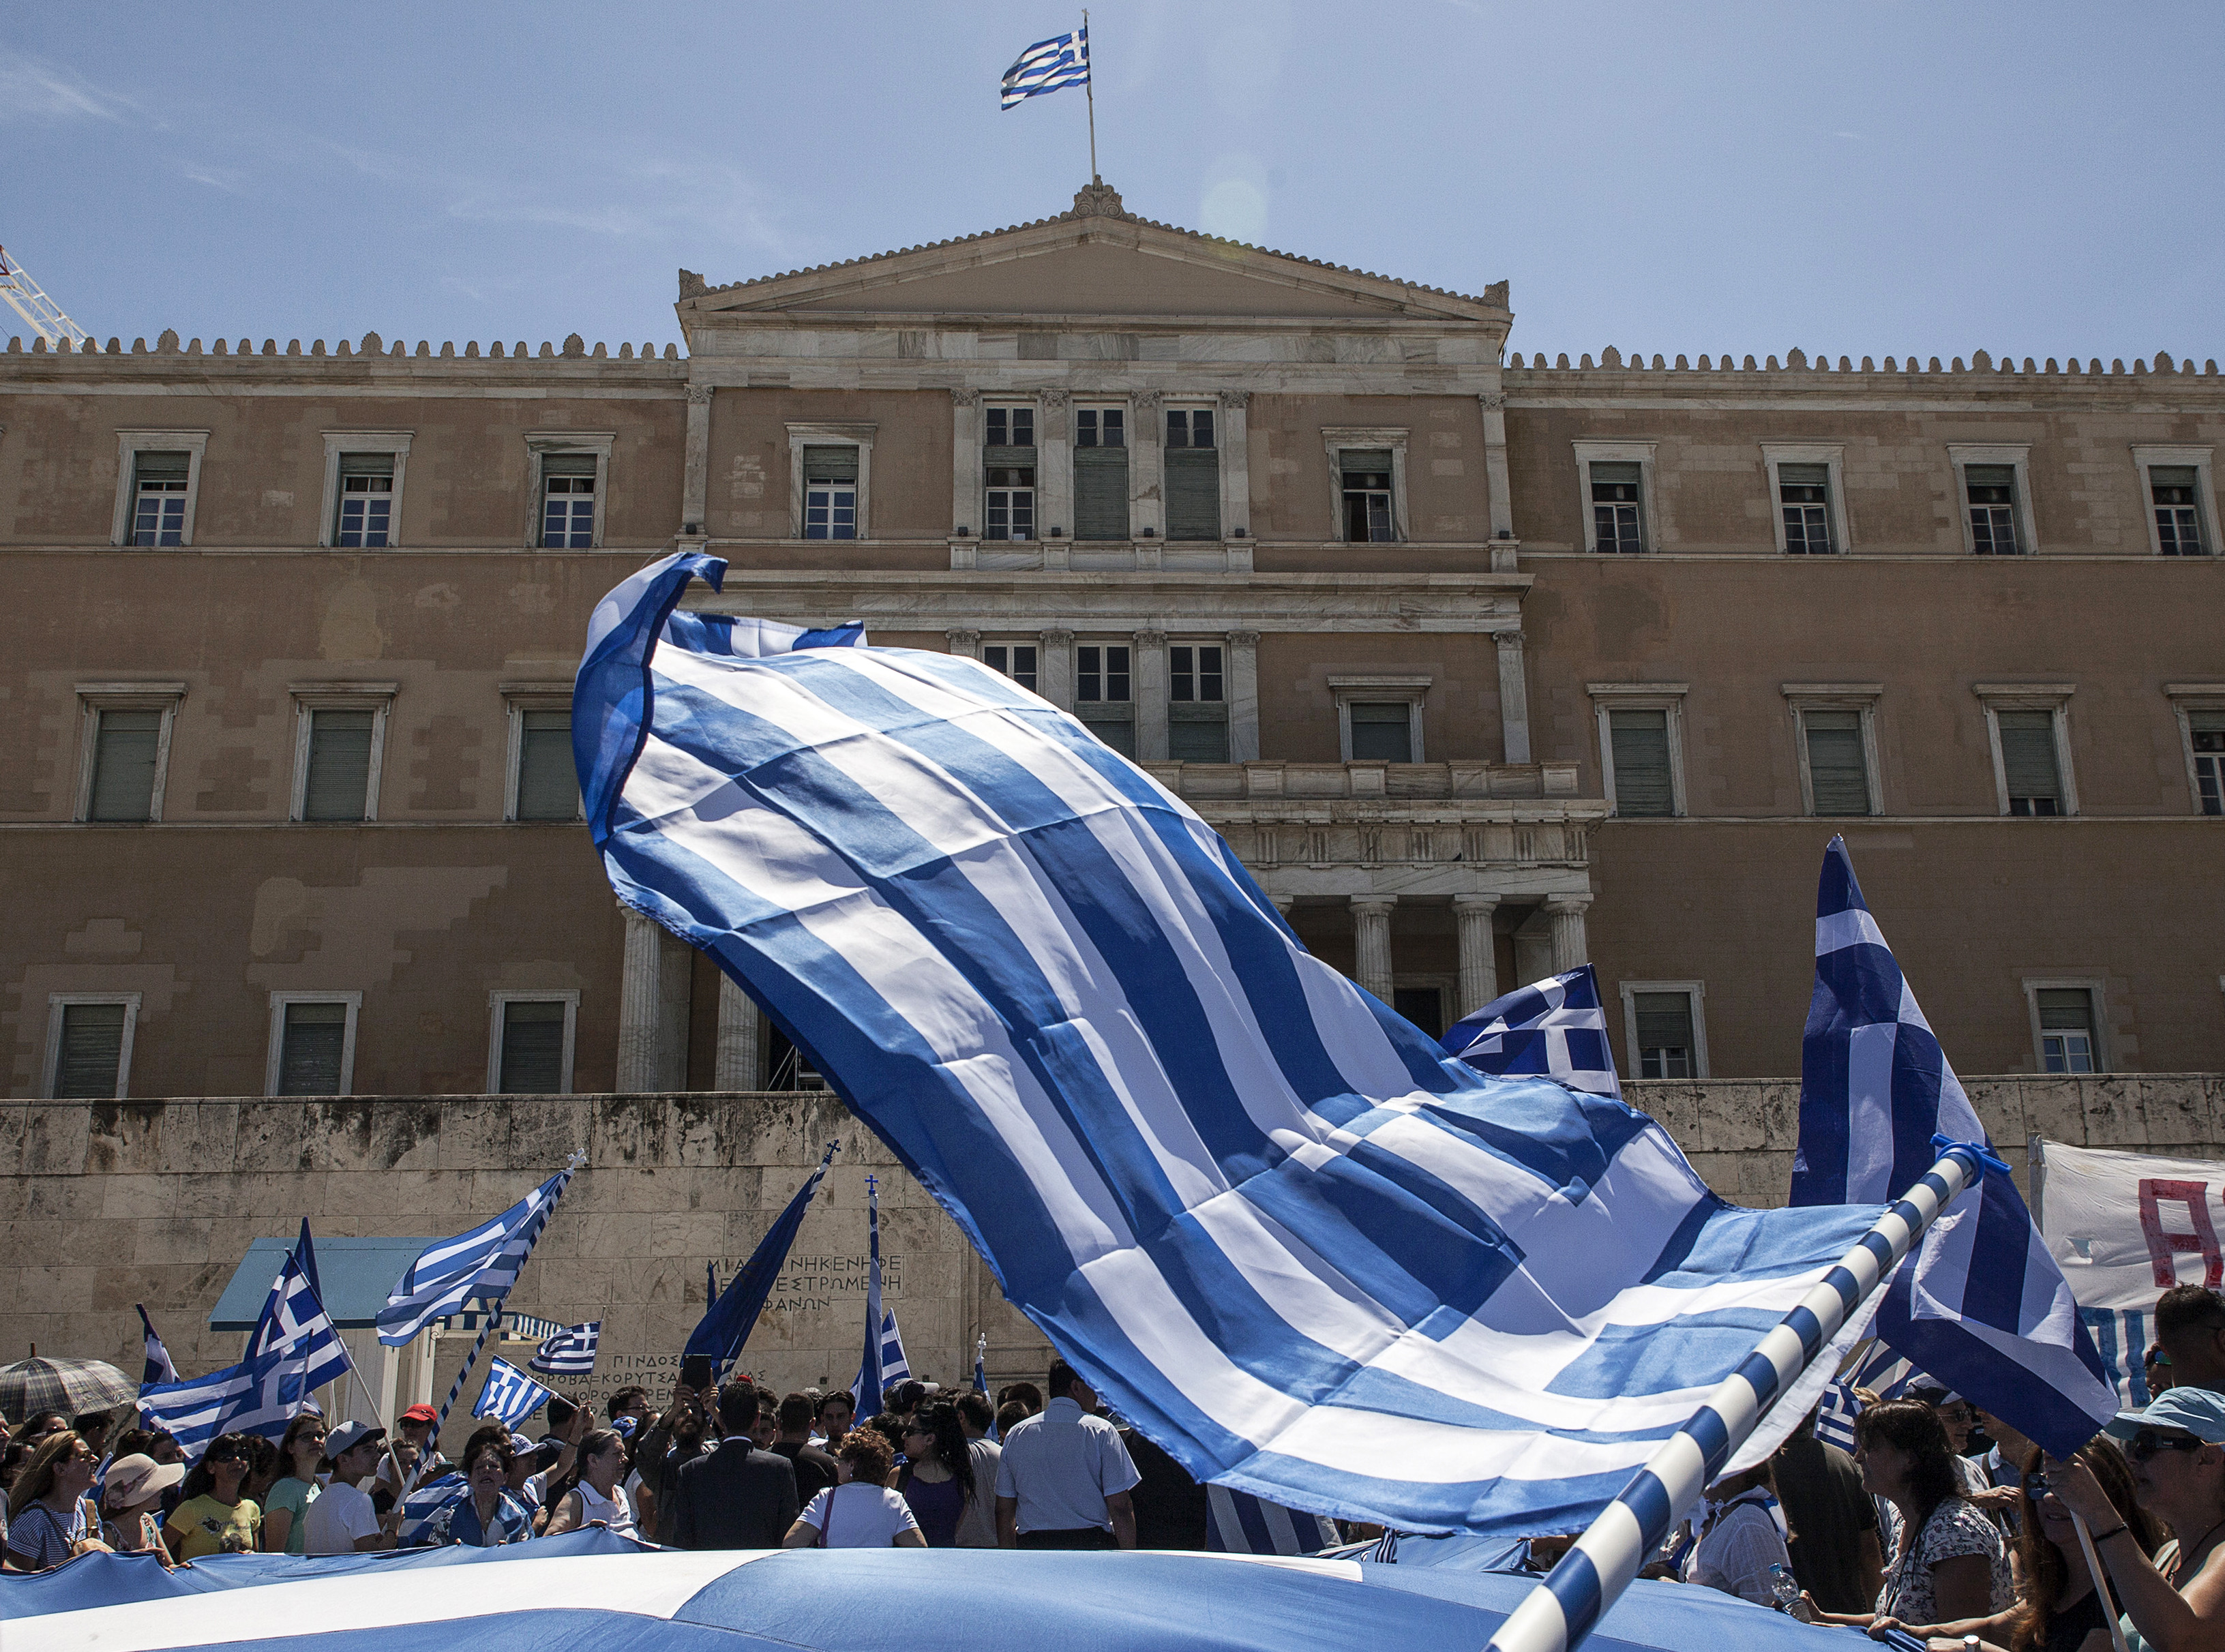 Долгов греции. Здание парламента в Греции. Парламент в Афинах. Парламент Греции Афины. Греция Афины президентский дворец.